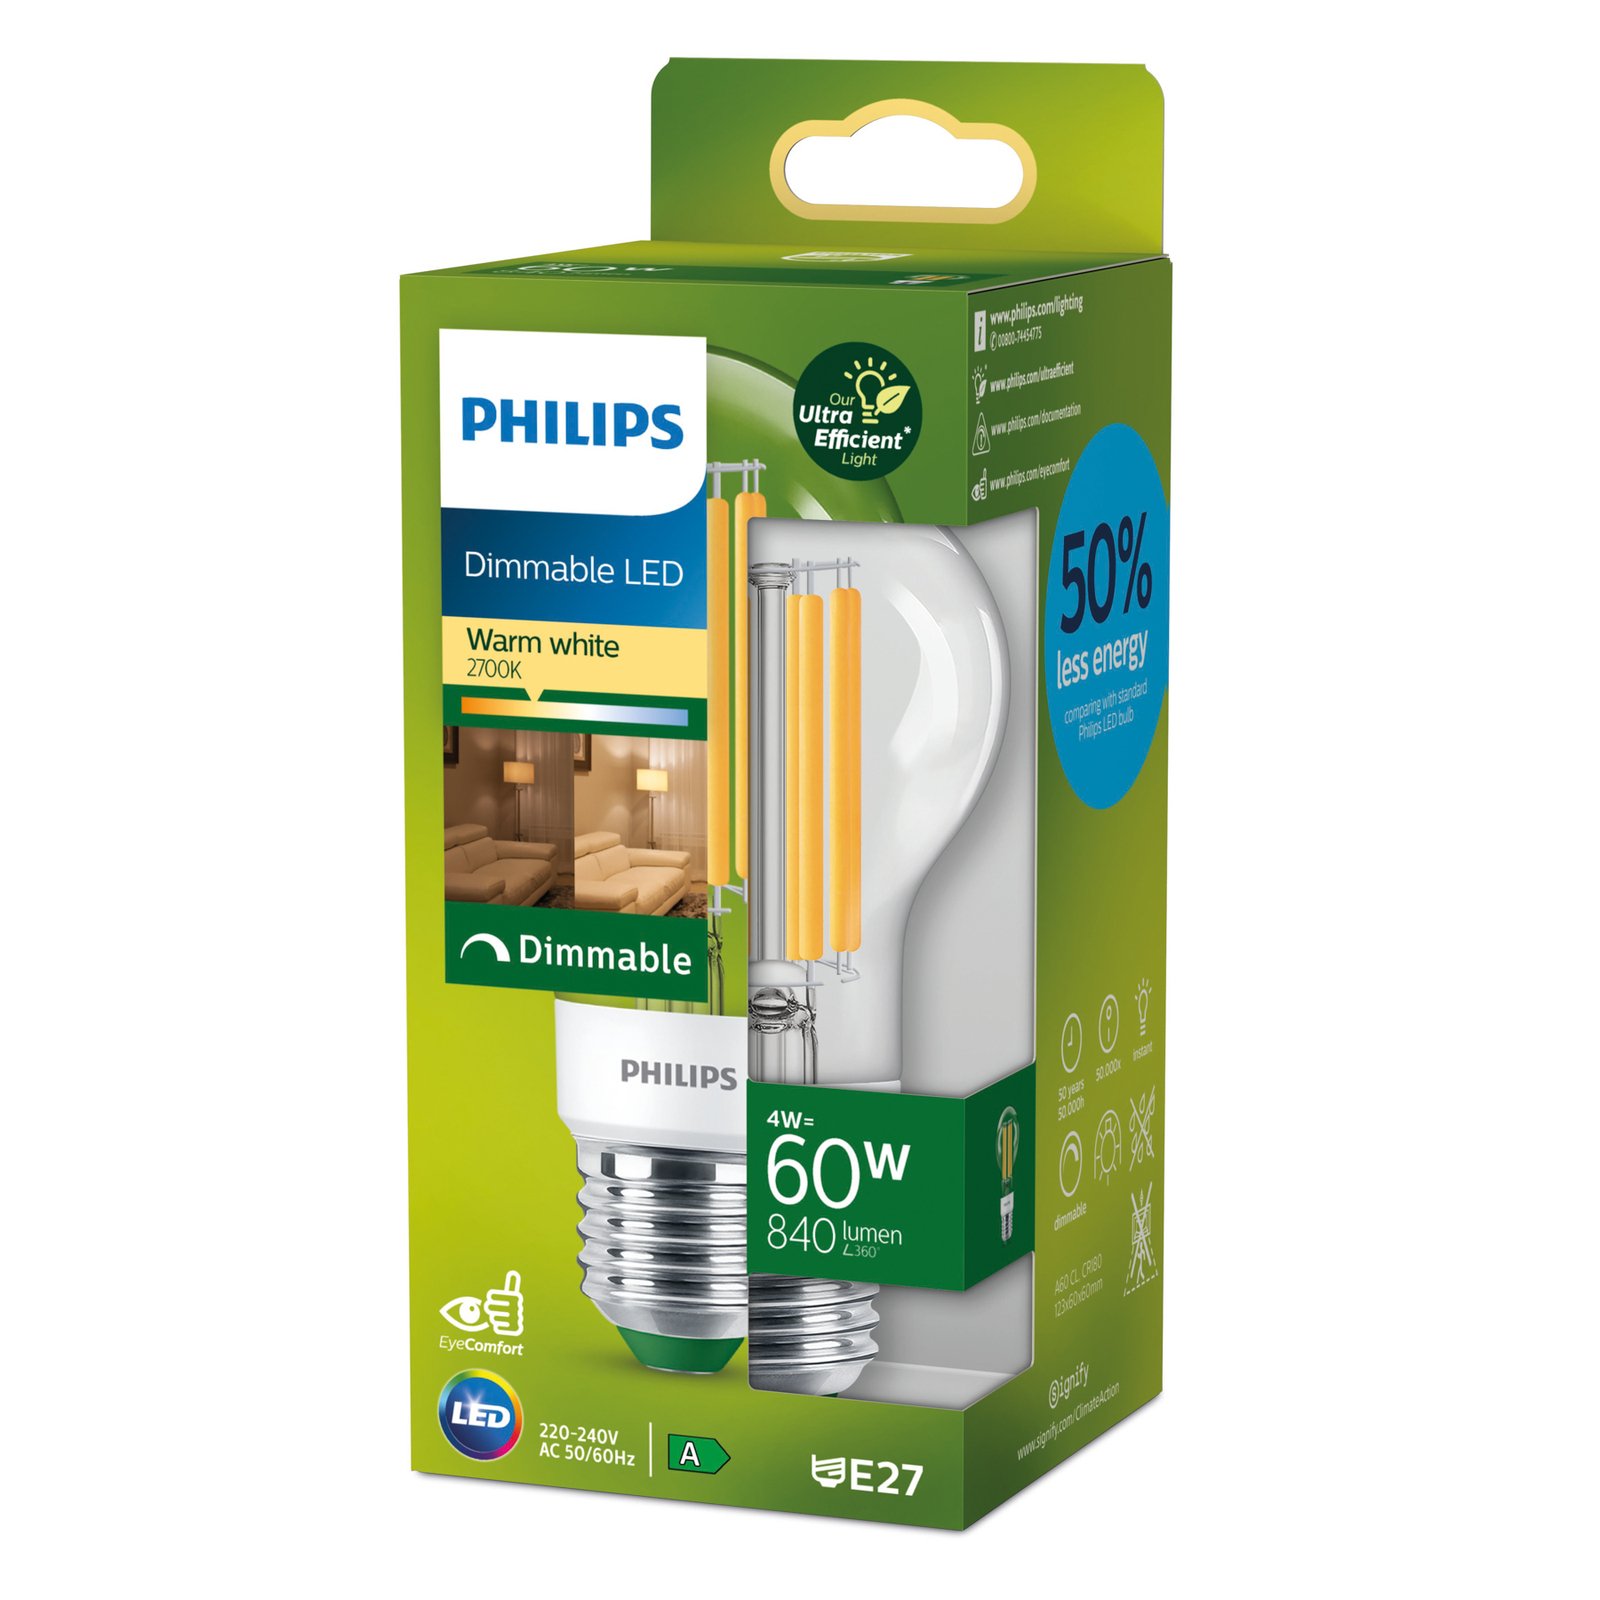 Philips E27 LED lamp A60 4W 840lm dim 2700K helder